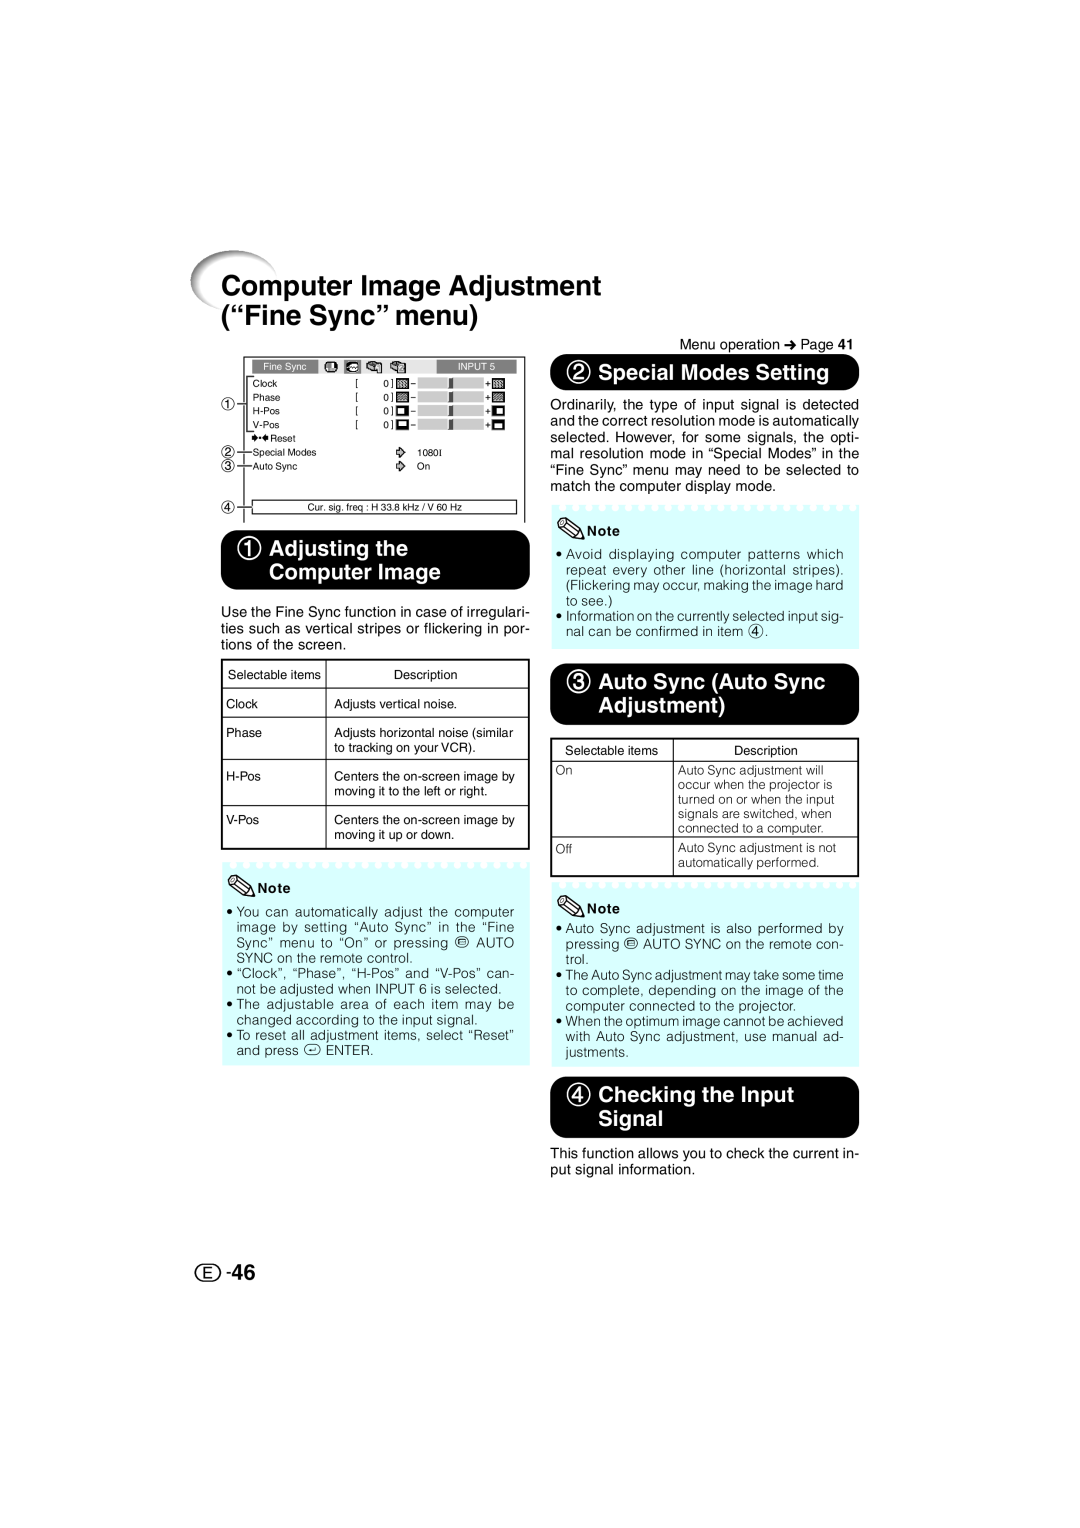 Sharp XV-Z3000U Computer Image Adjustment “Fine Sync” menu, 1Adjusting the Computer Image, 2Special Modes Setting 